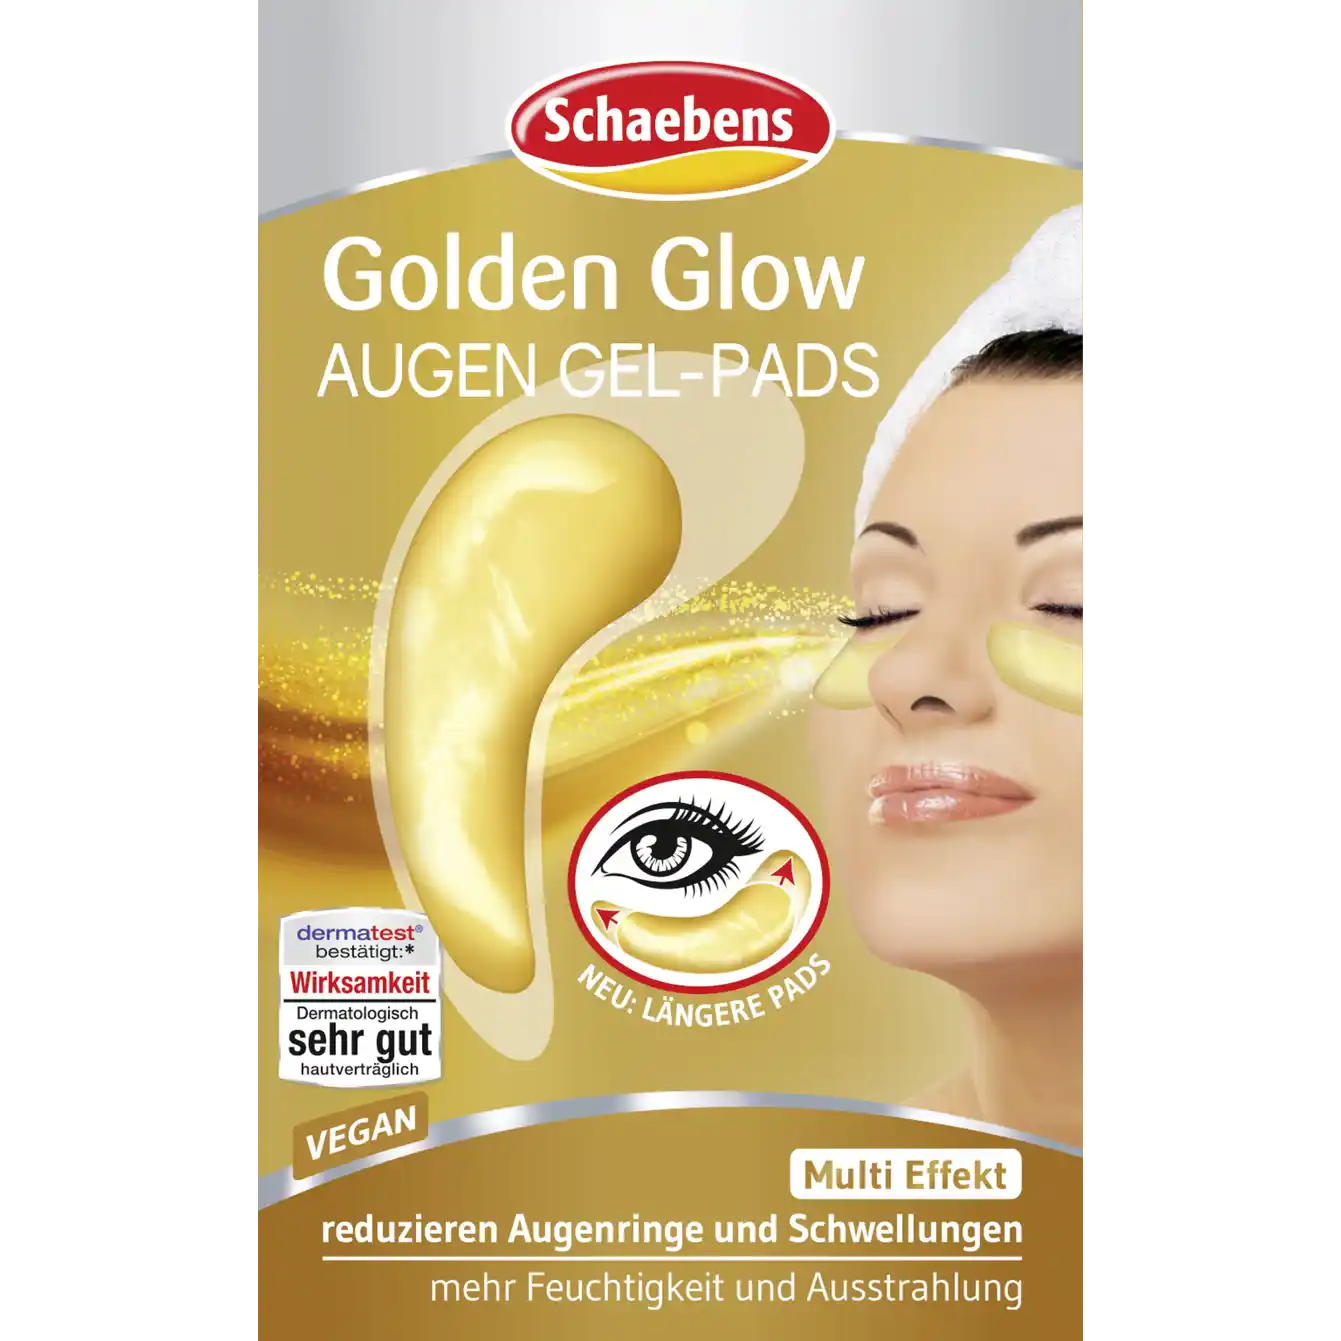 Schaebens Golden Glow Eye Gel Pads 1 piece